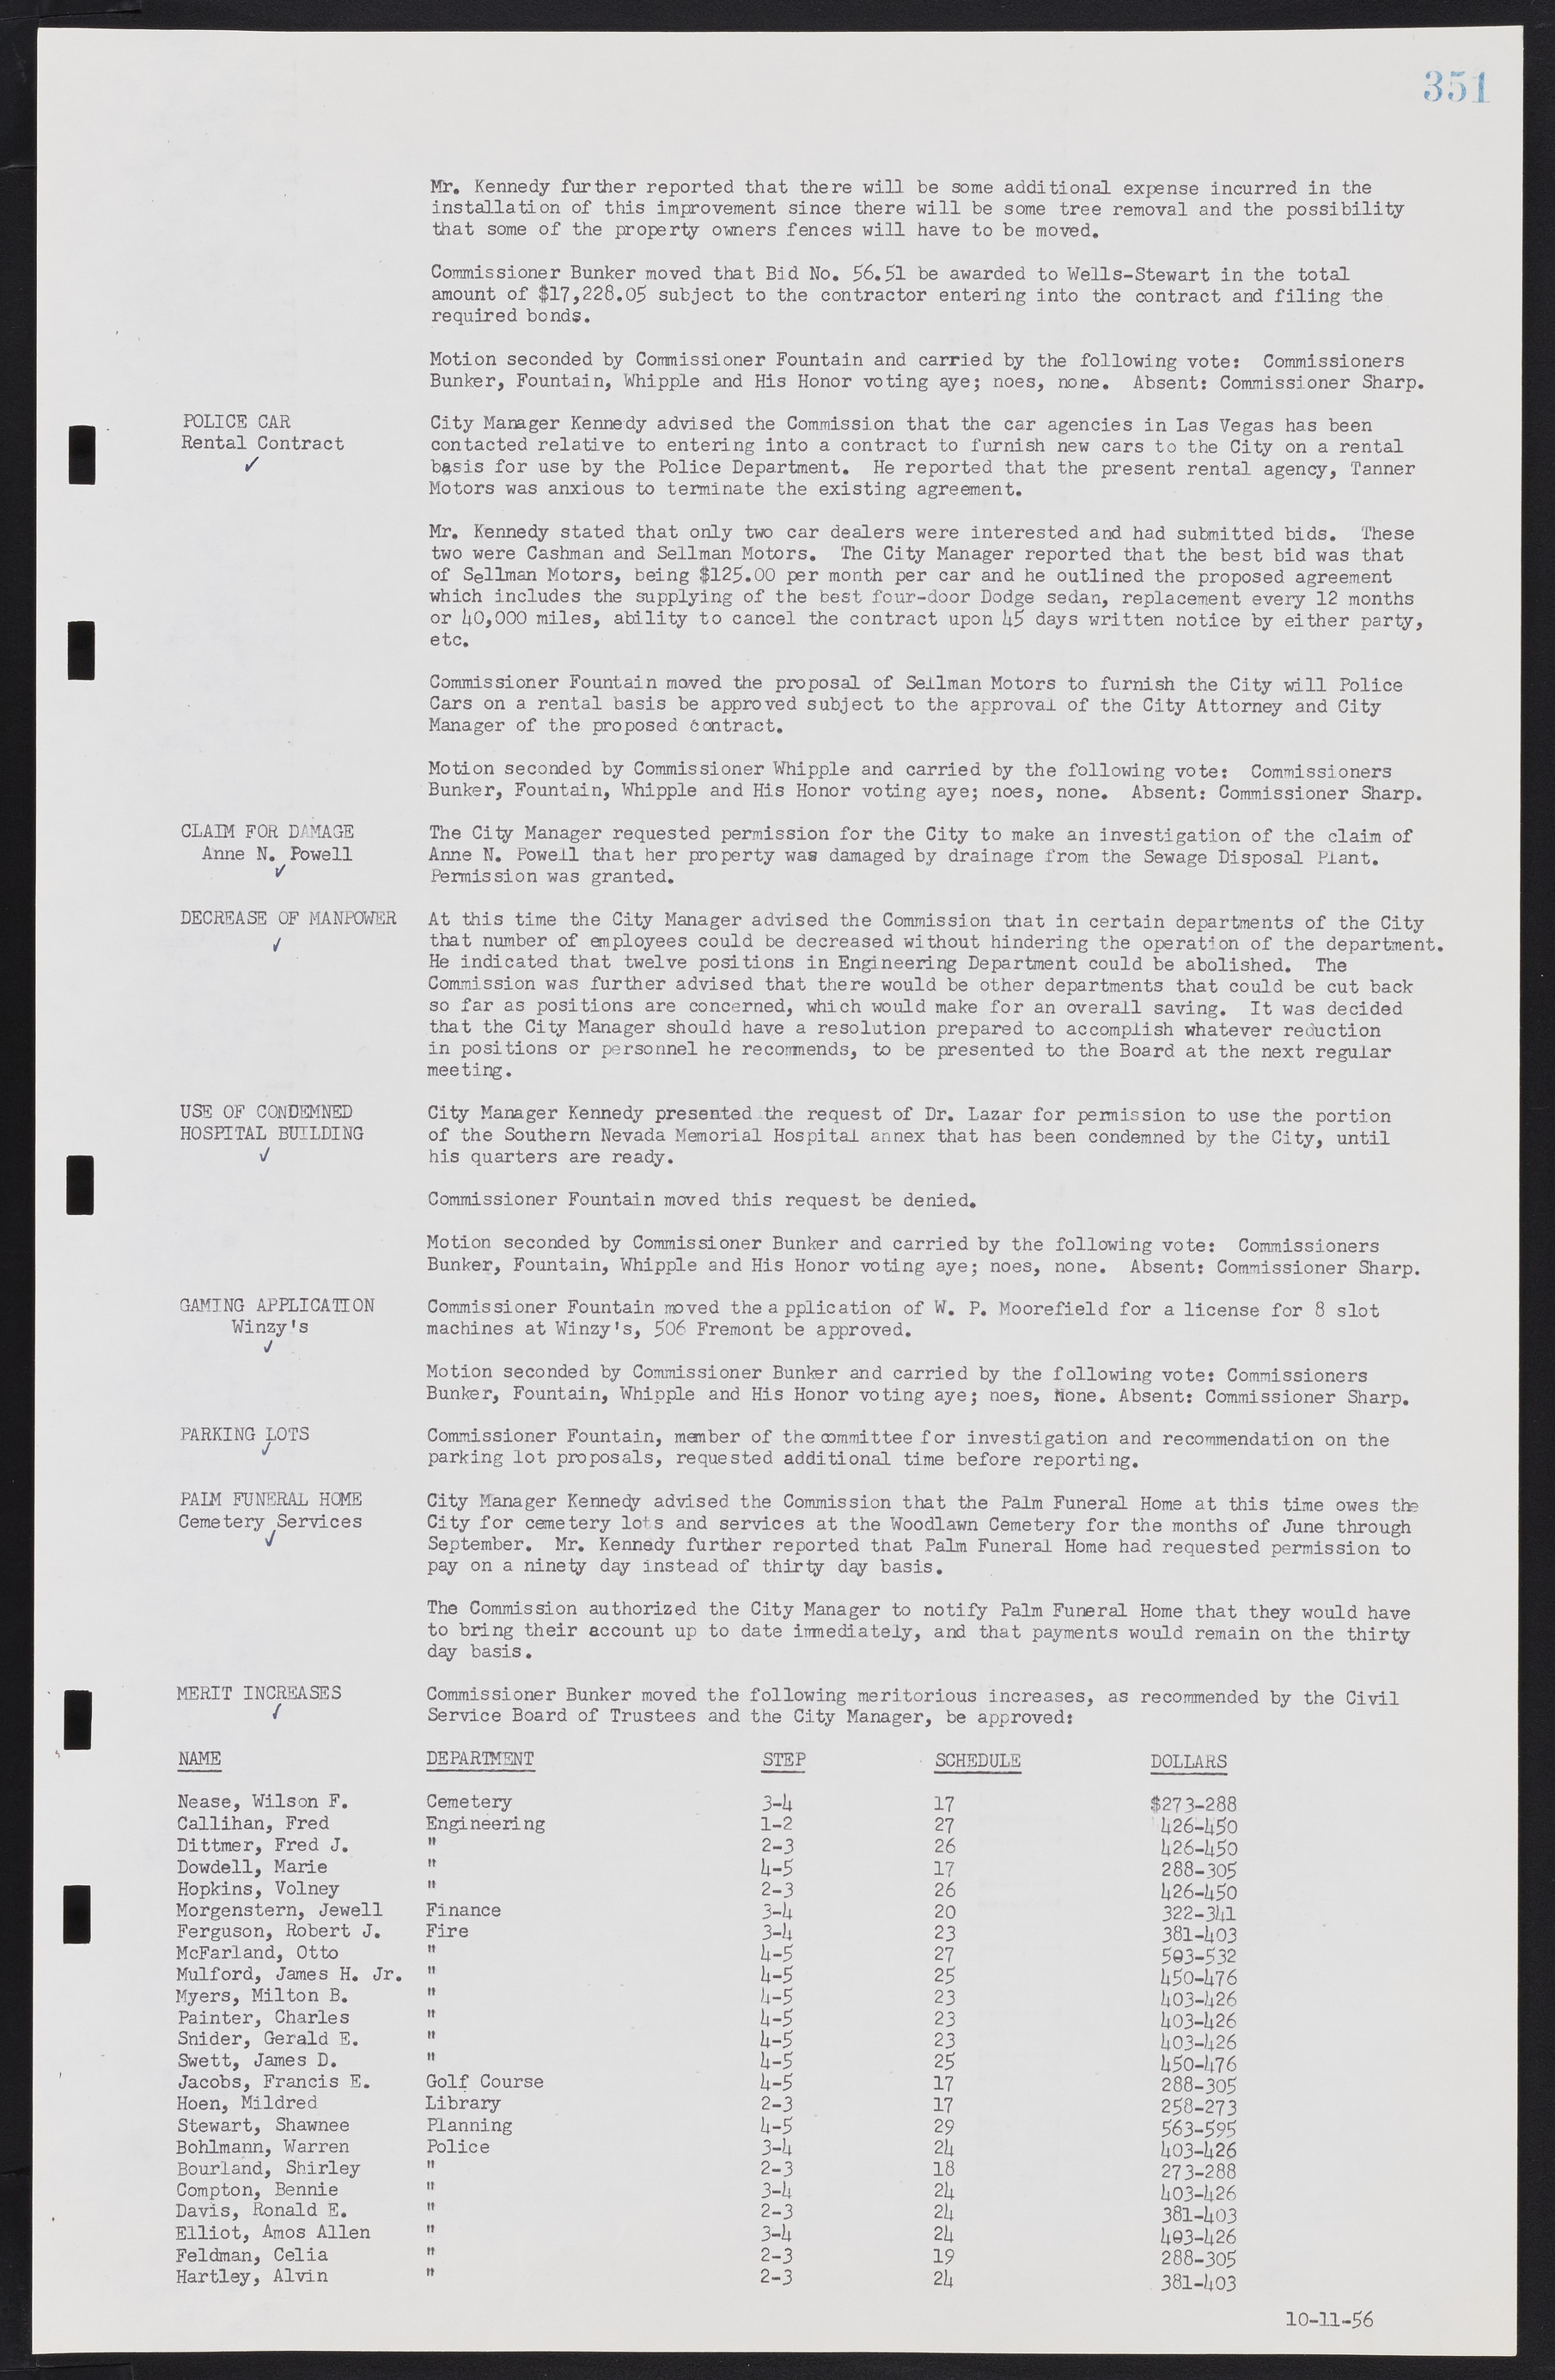 Las Vegas City Commission Minutes, September 21, 1955 to November 20, 1957, lvc000010-371